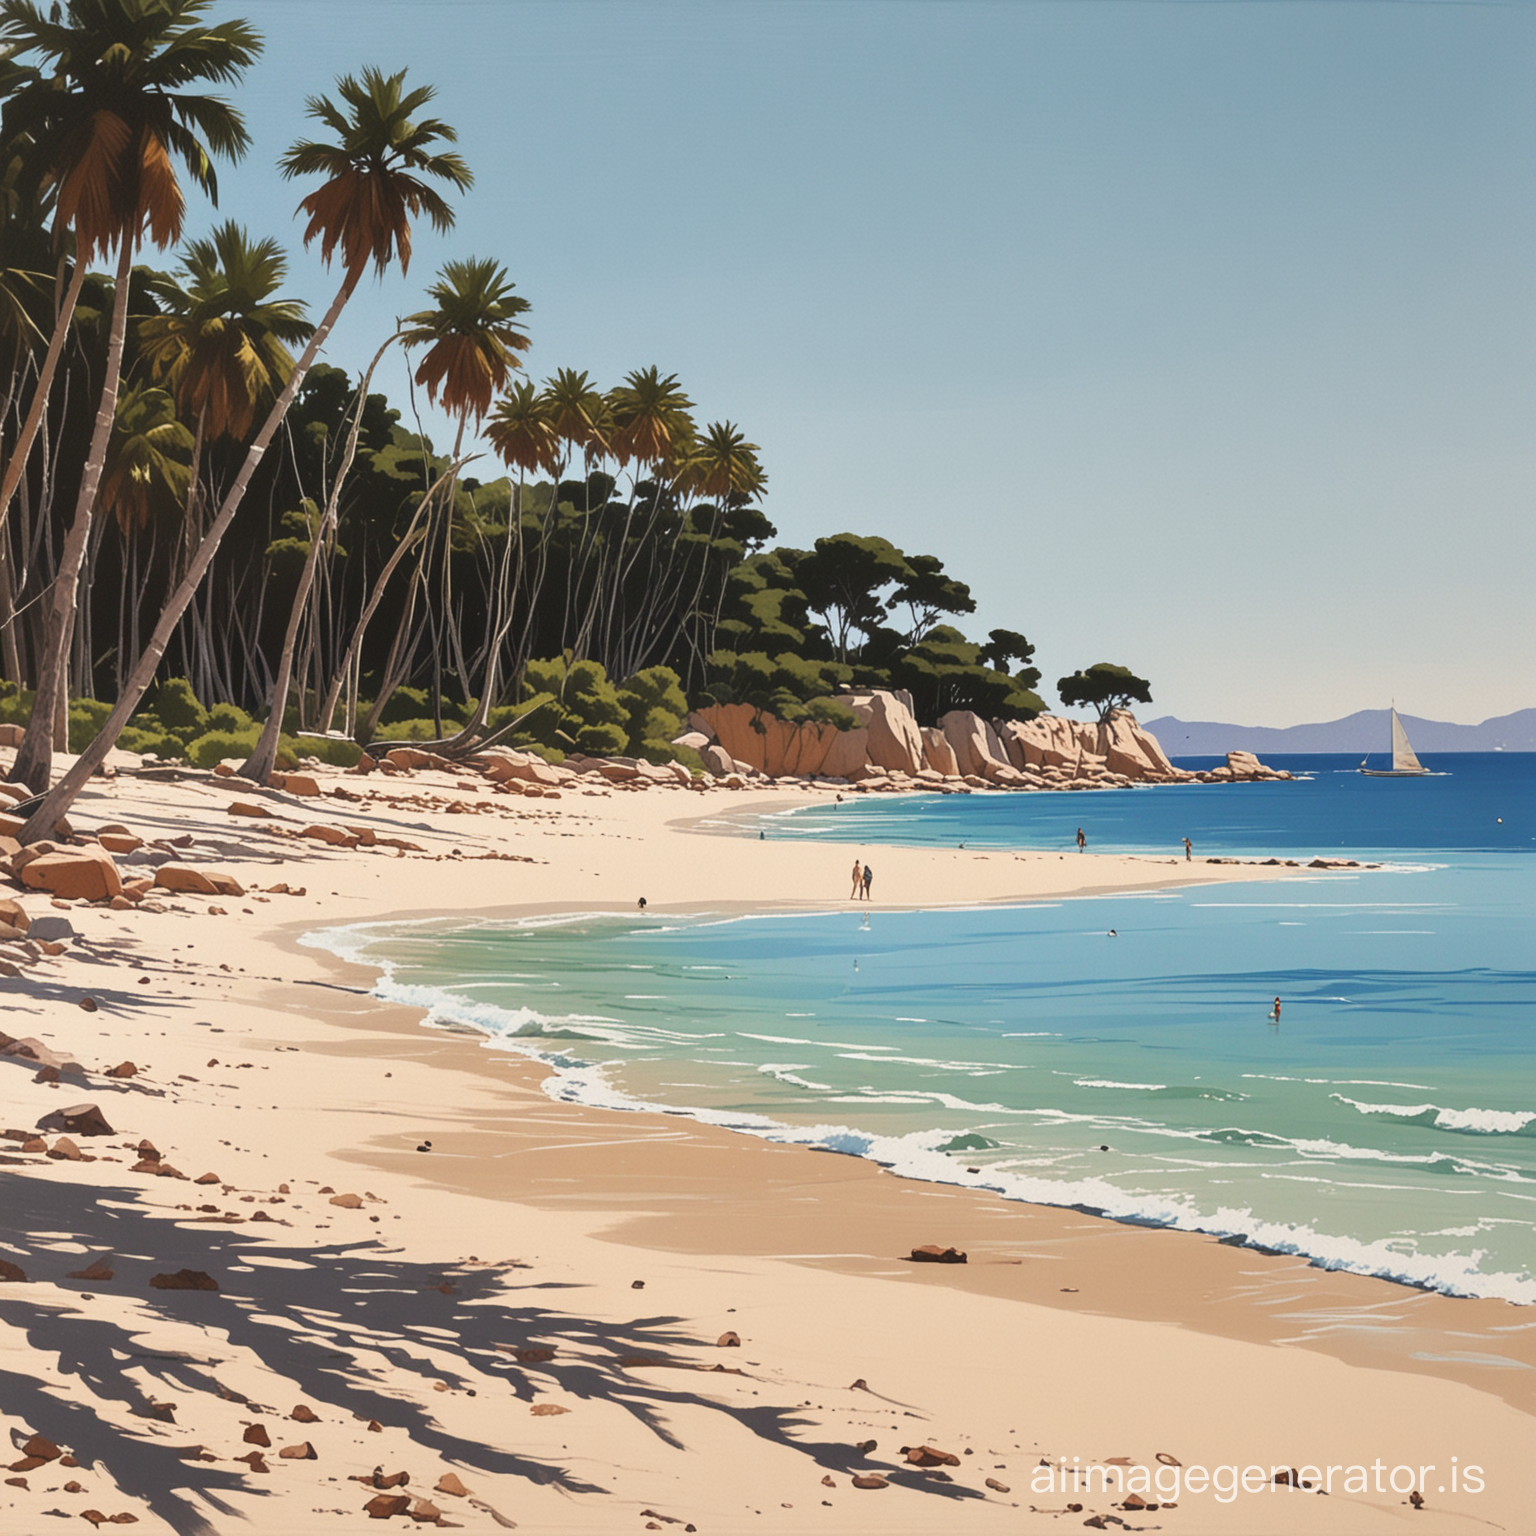 Beach scenery on Mallorca, applying the painting style of alex katz